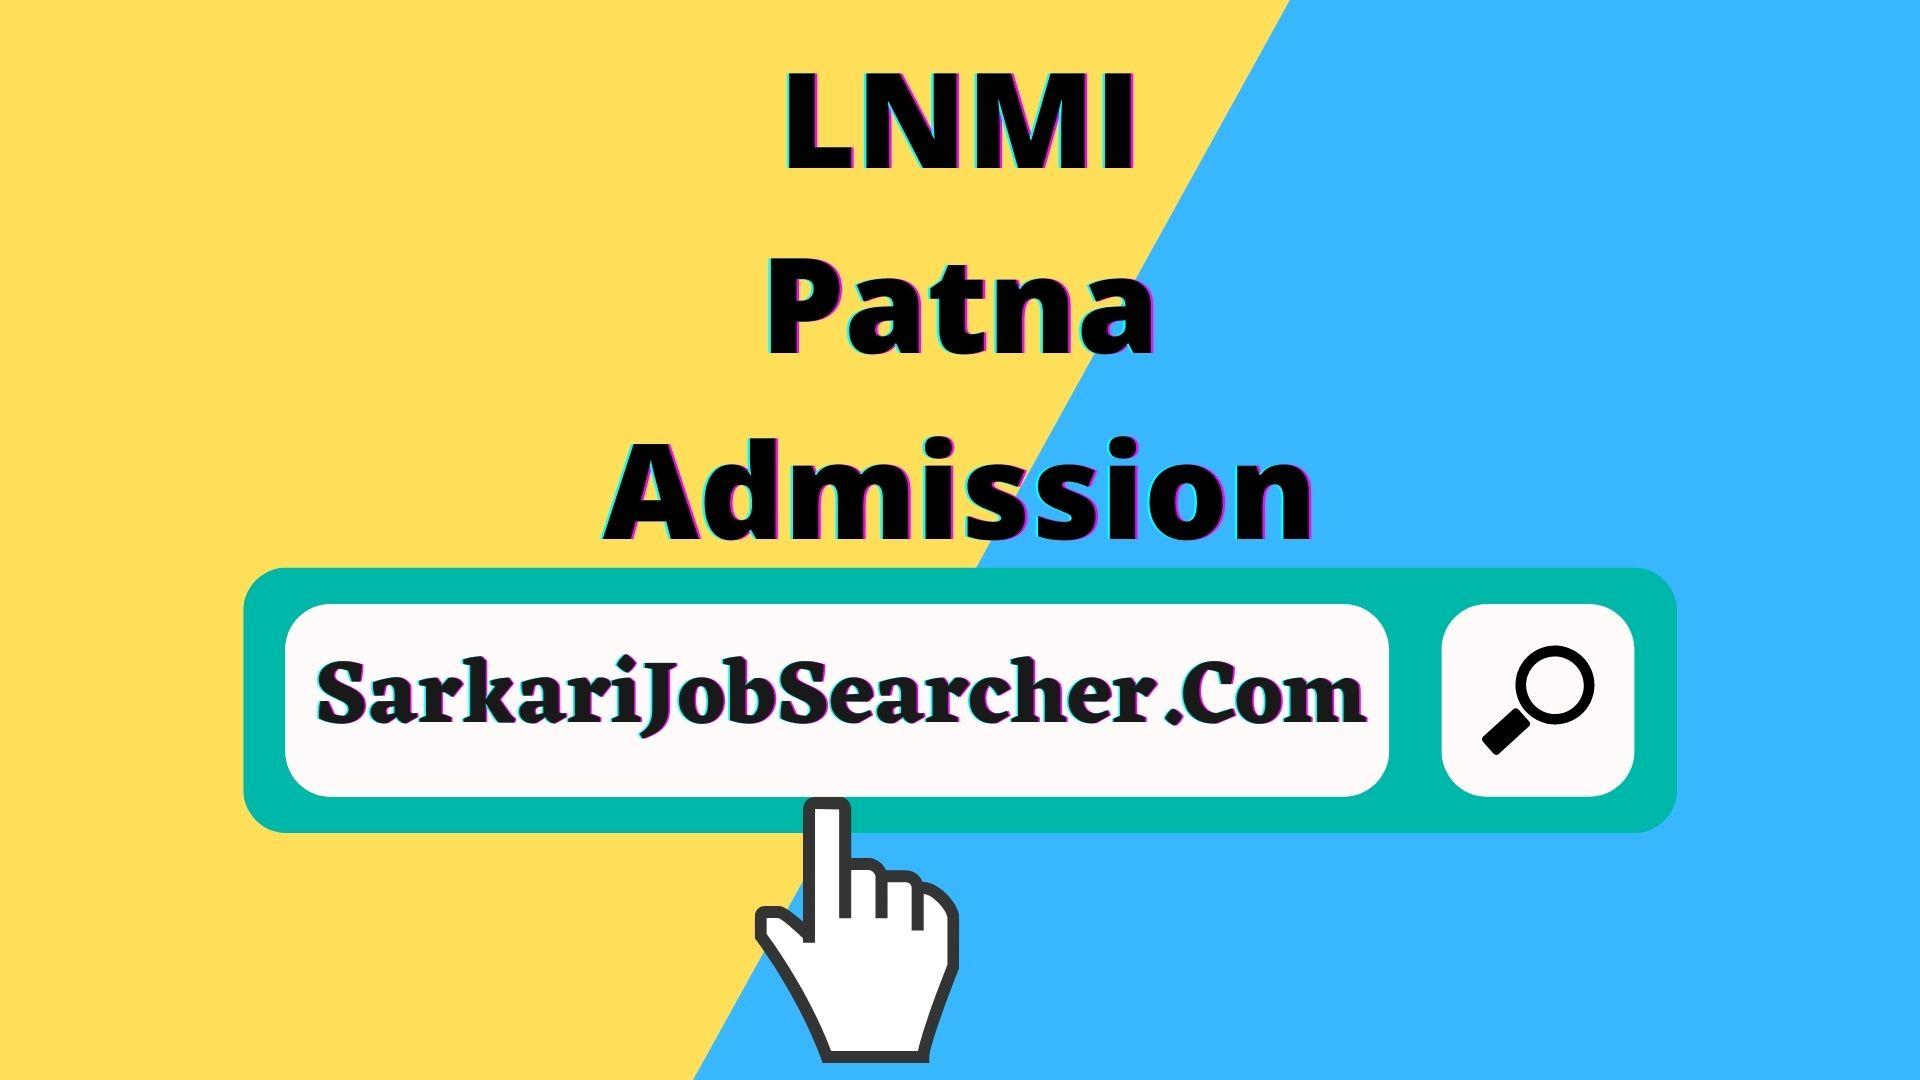 LNMI Patna Admission